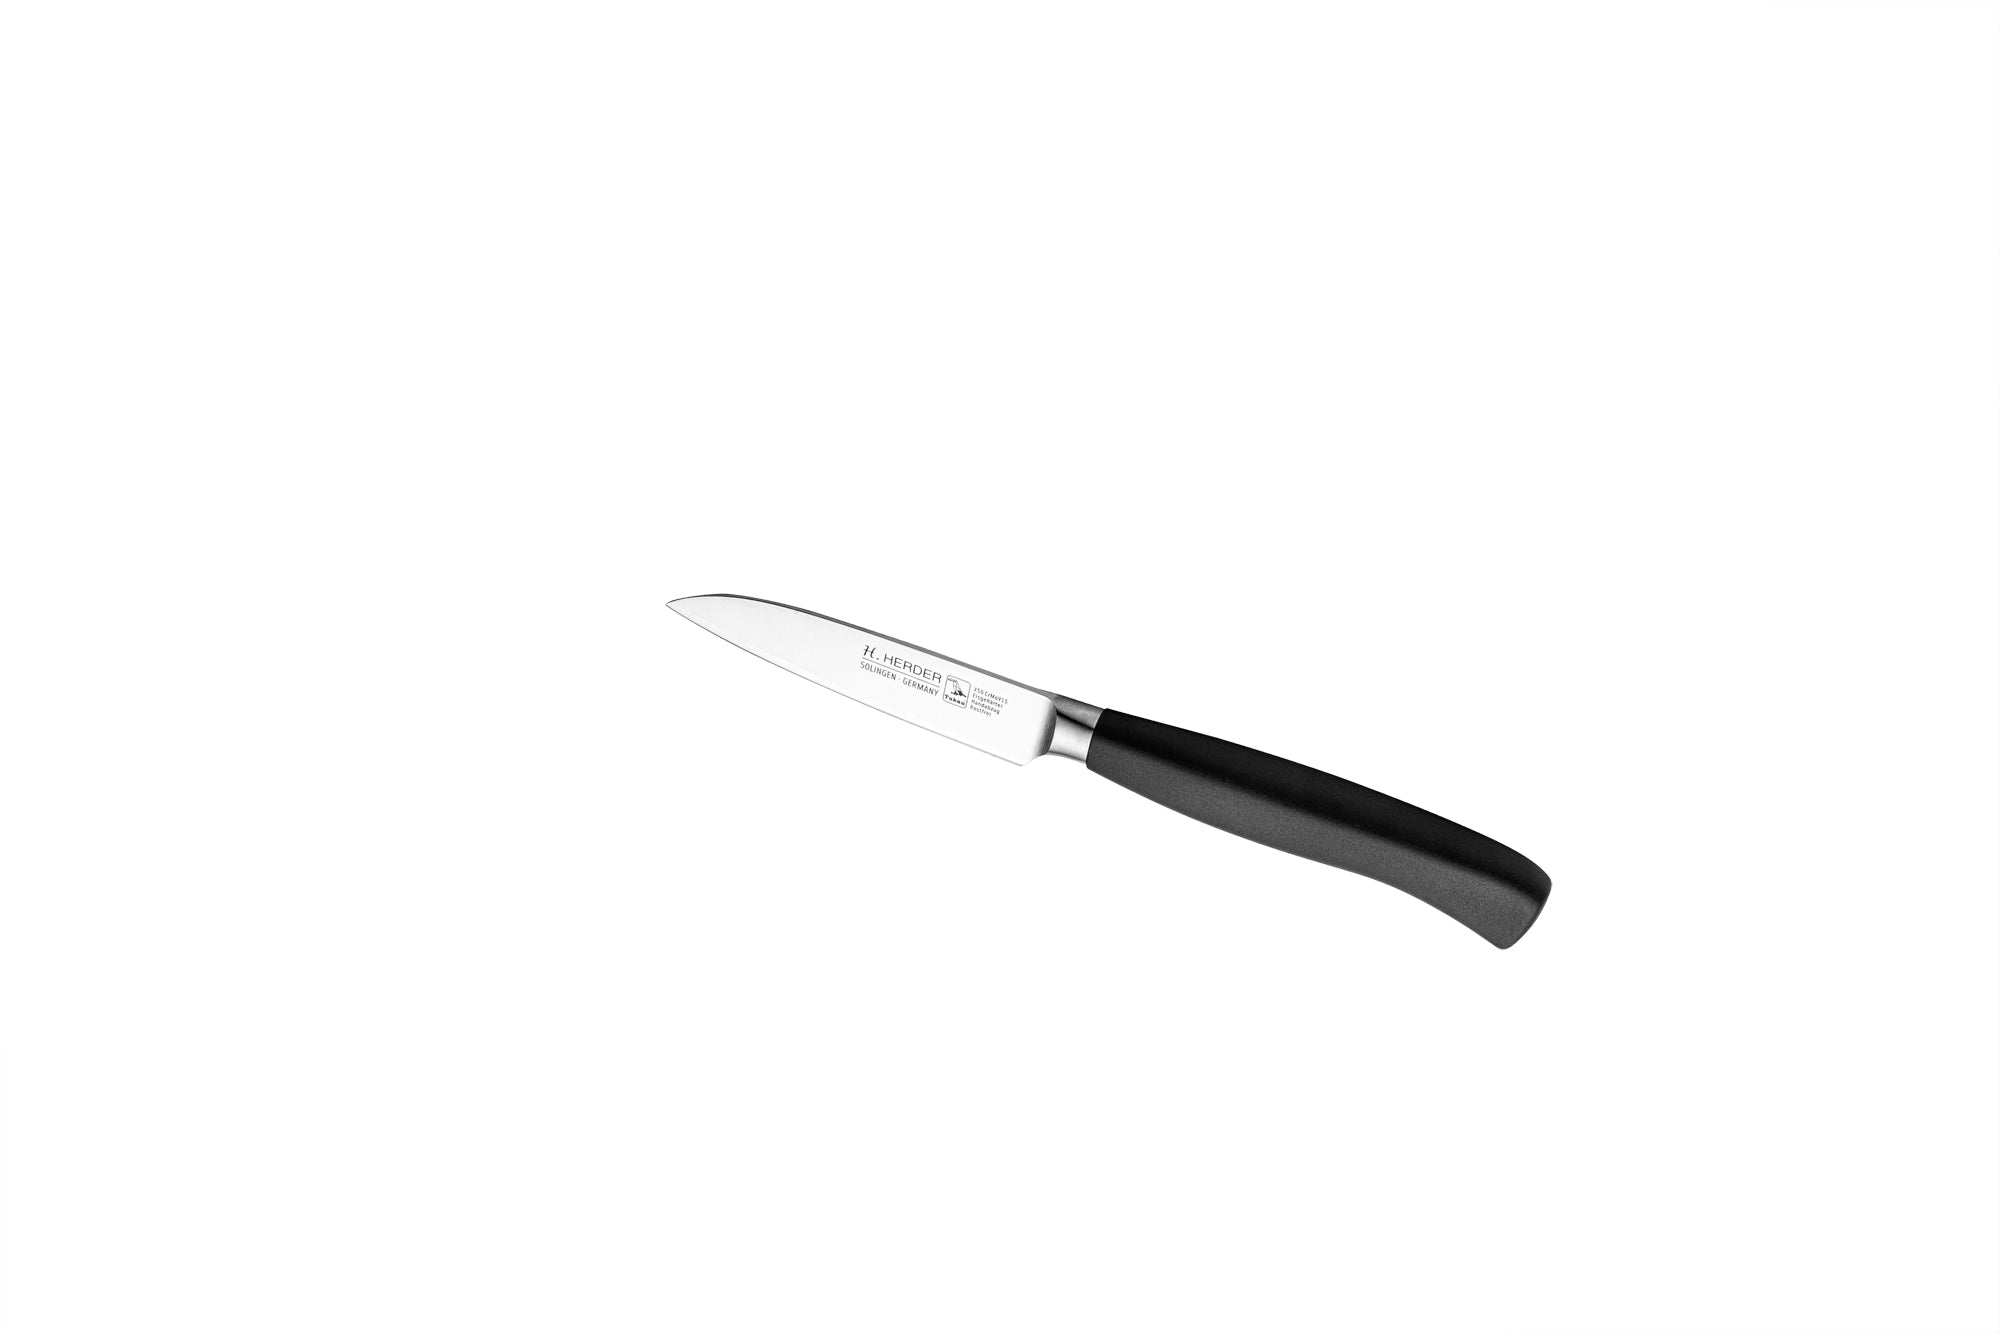 Cuchillo para verduras Eterno Gastro, longitud de la hoja 9cm